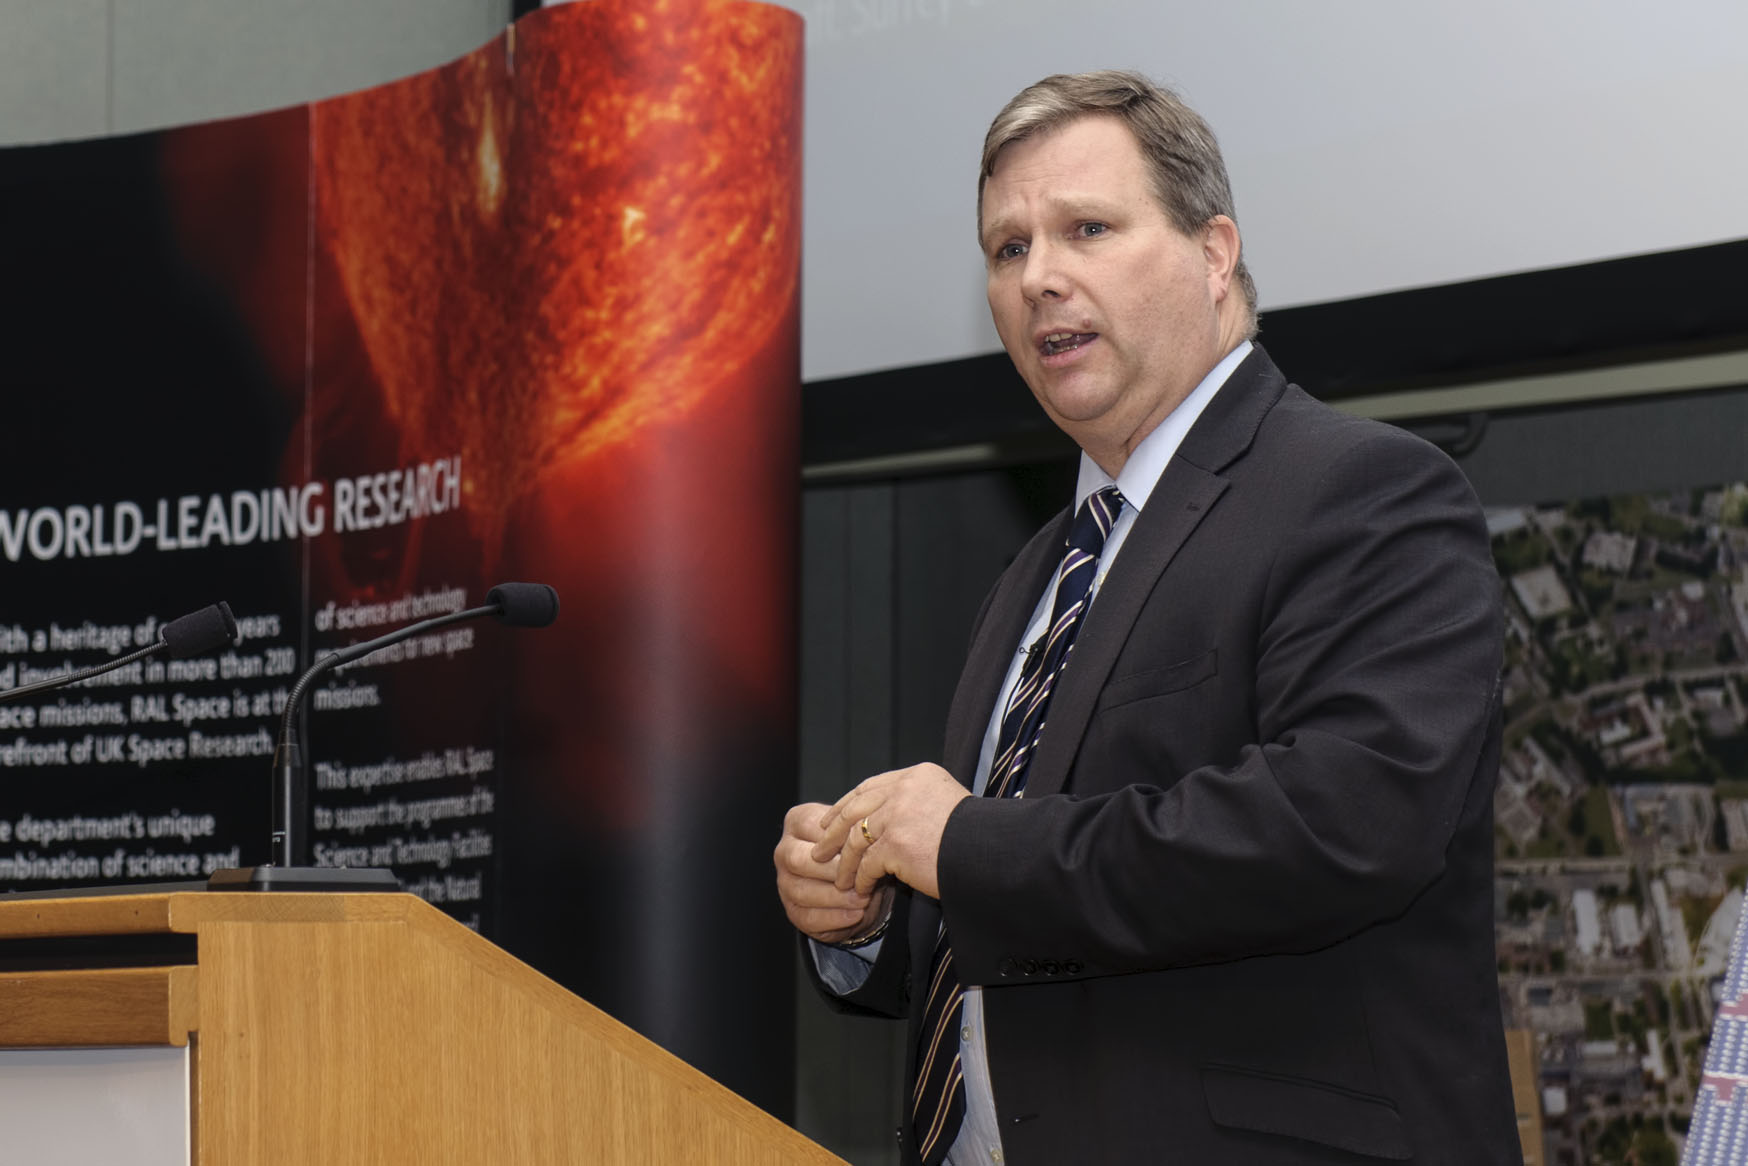 Patrick Wood (Surrey Satellite Technology Group Managing Director)